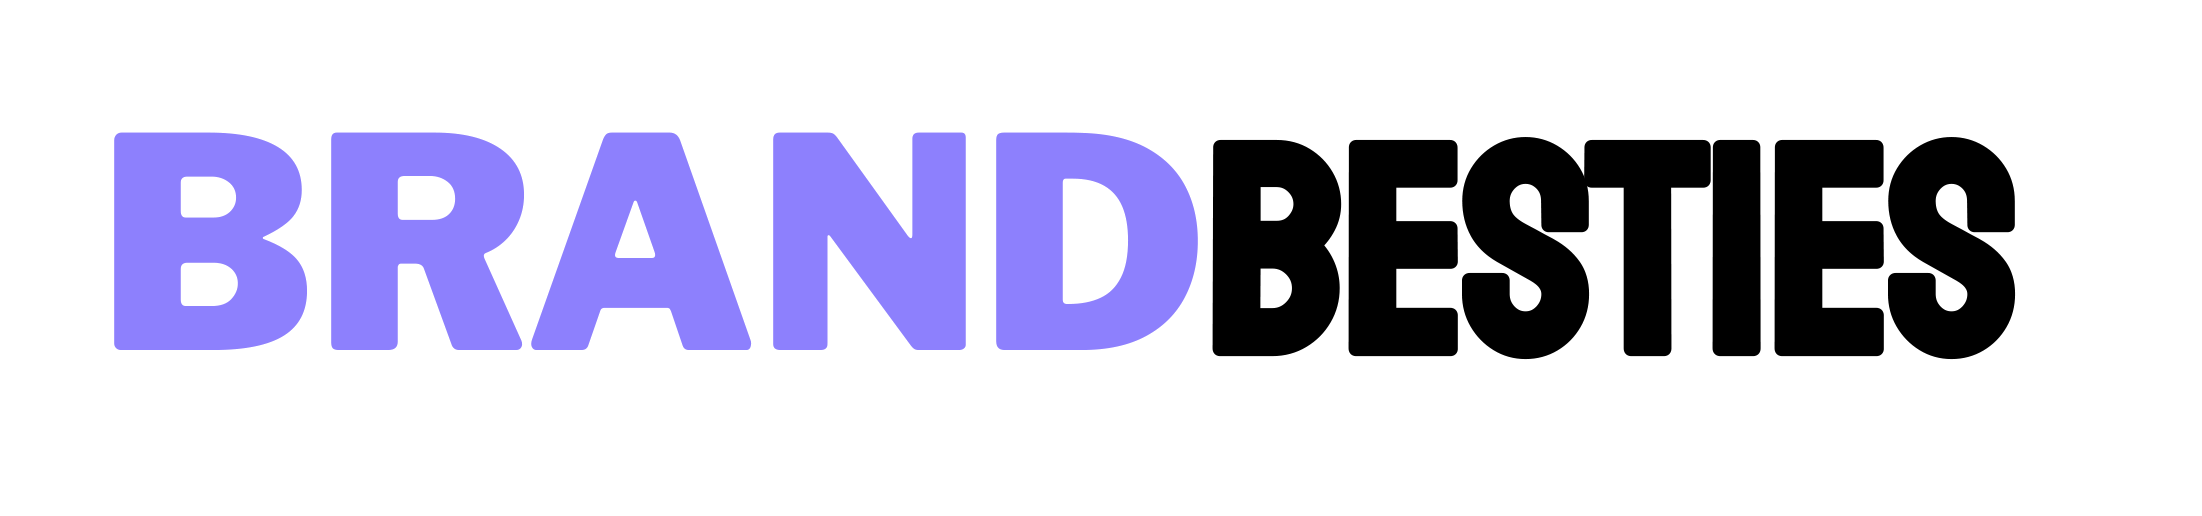 Brand Besties logo in full color